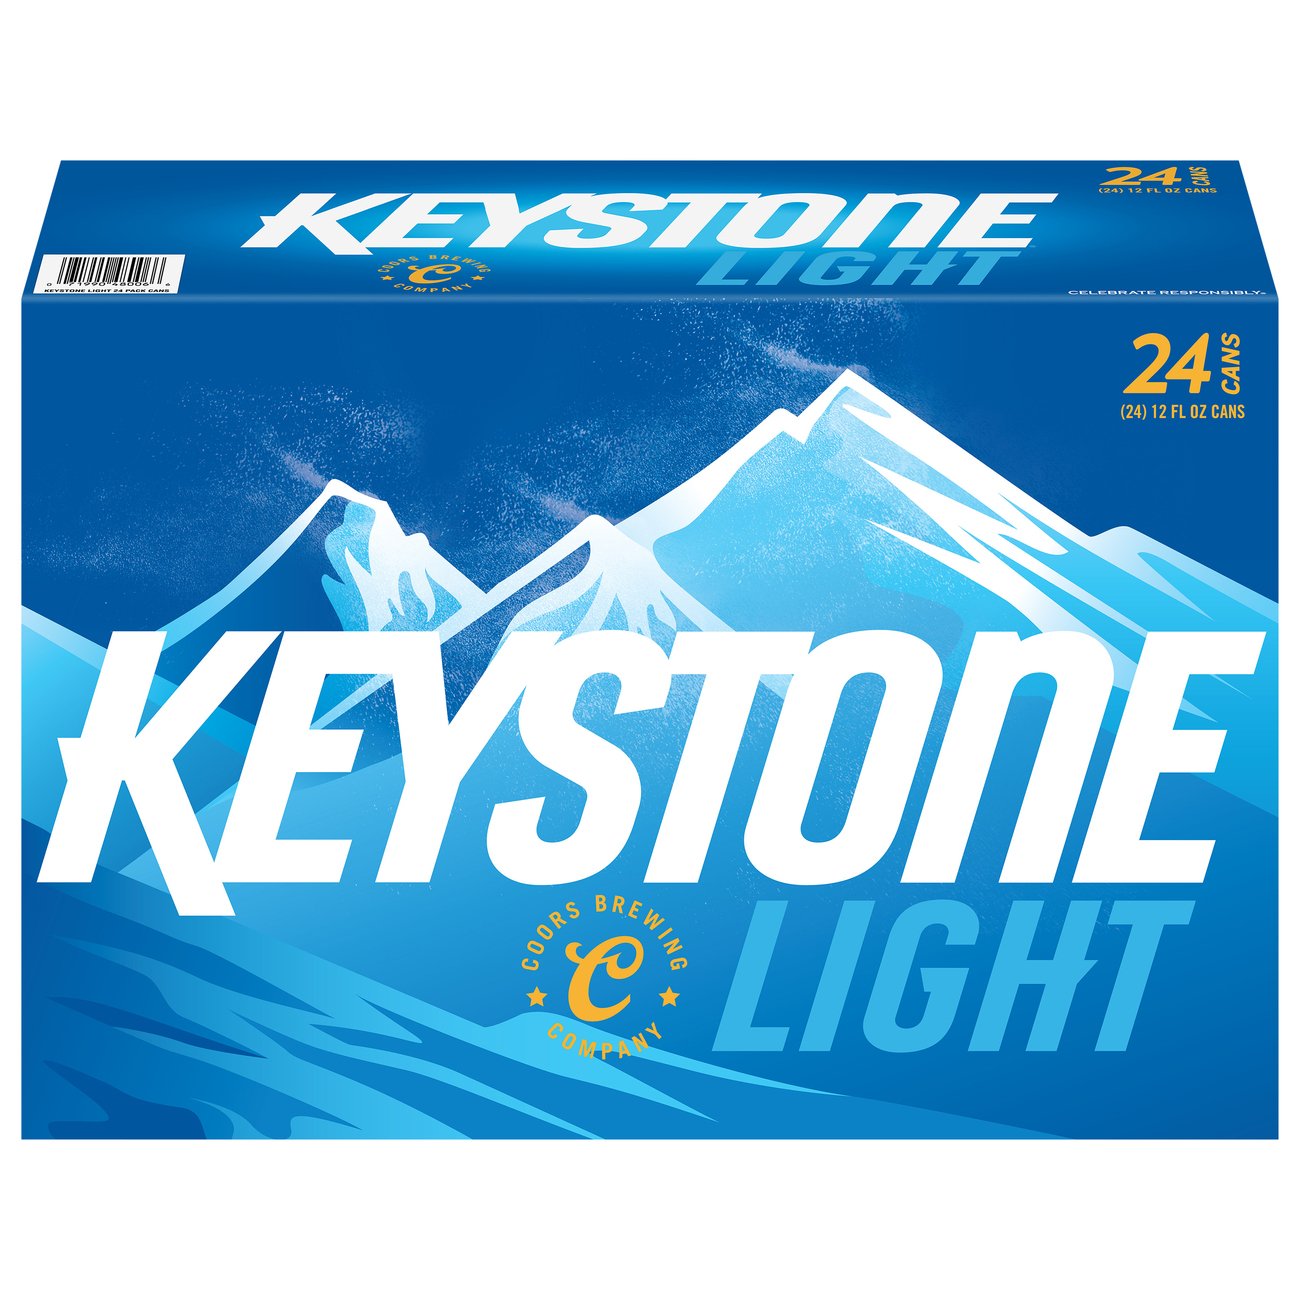 Keystone Light Beer - 24pk/12 fl oz Cans